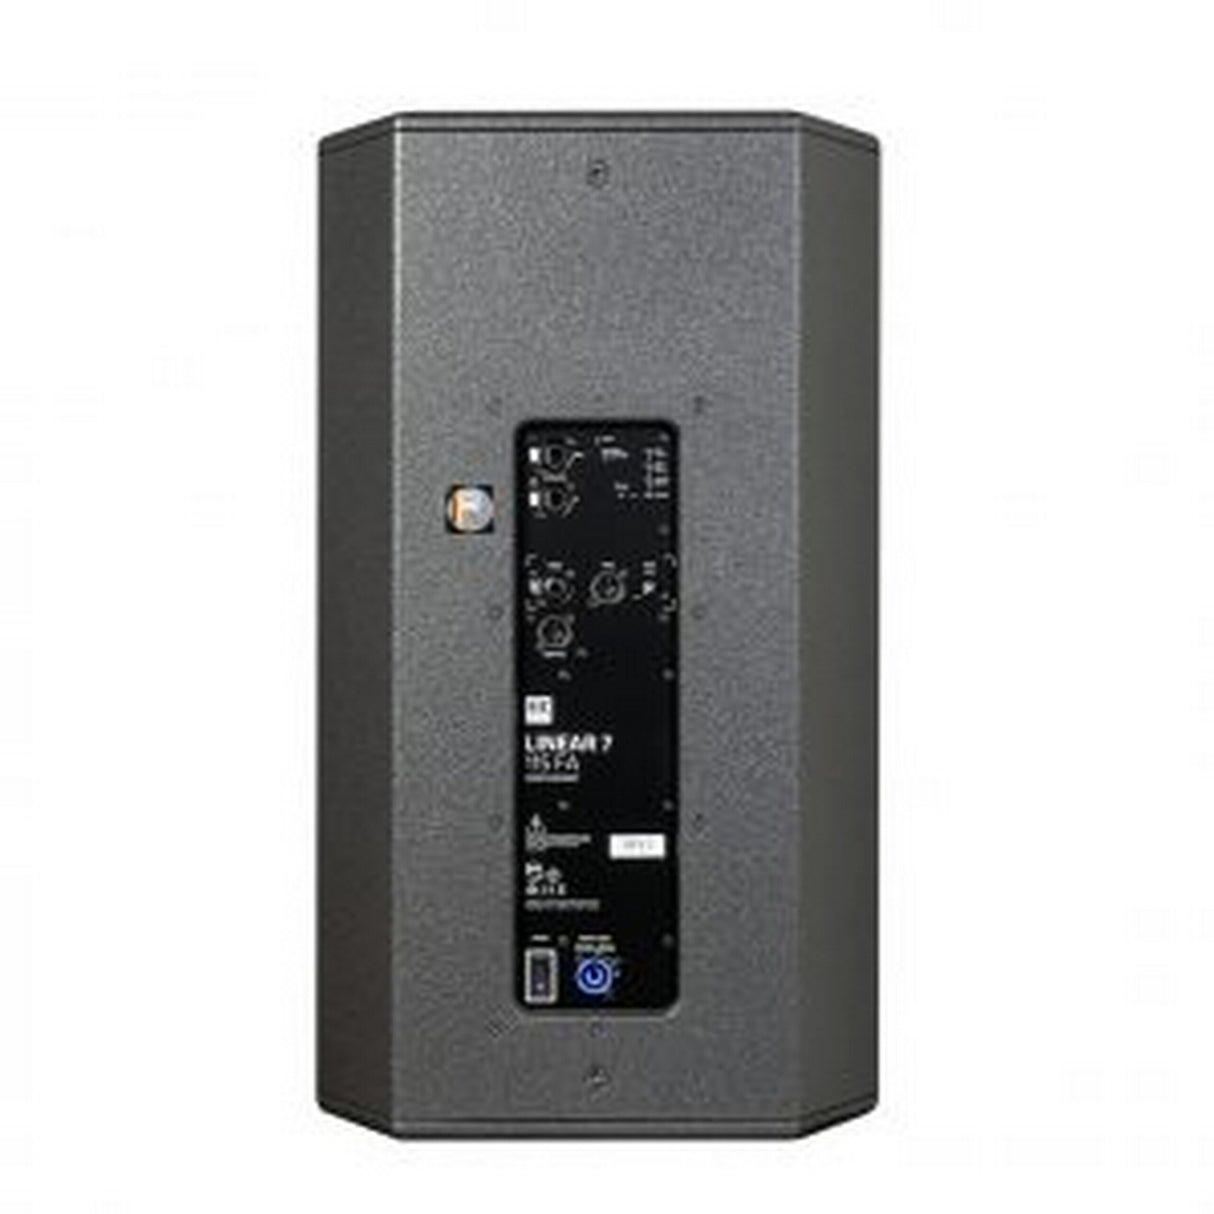 HK Audio Linear 7 115 FA 2000W 15 Inch Active PA Speaker